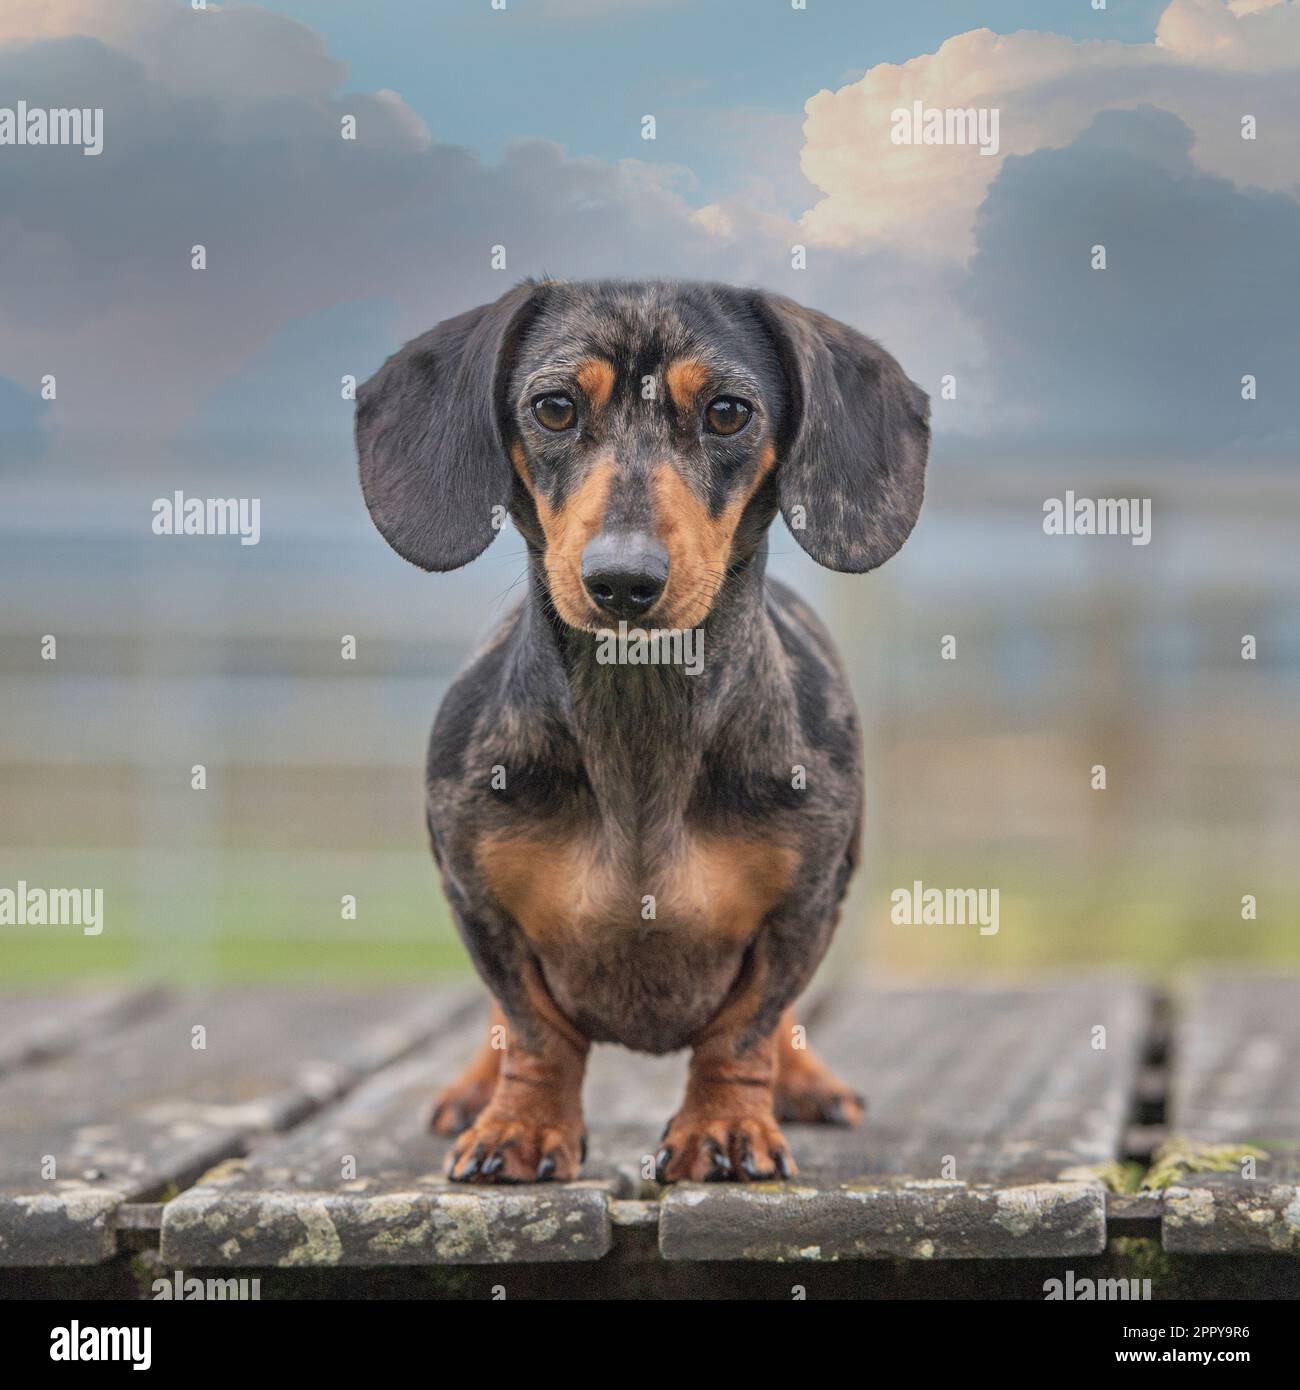 miniature dachshund Stock Photo